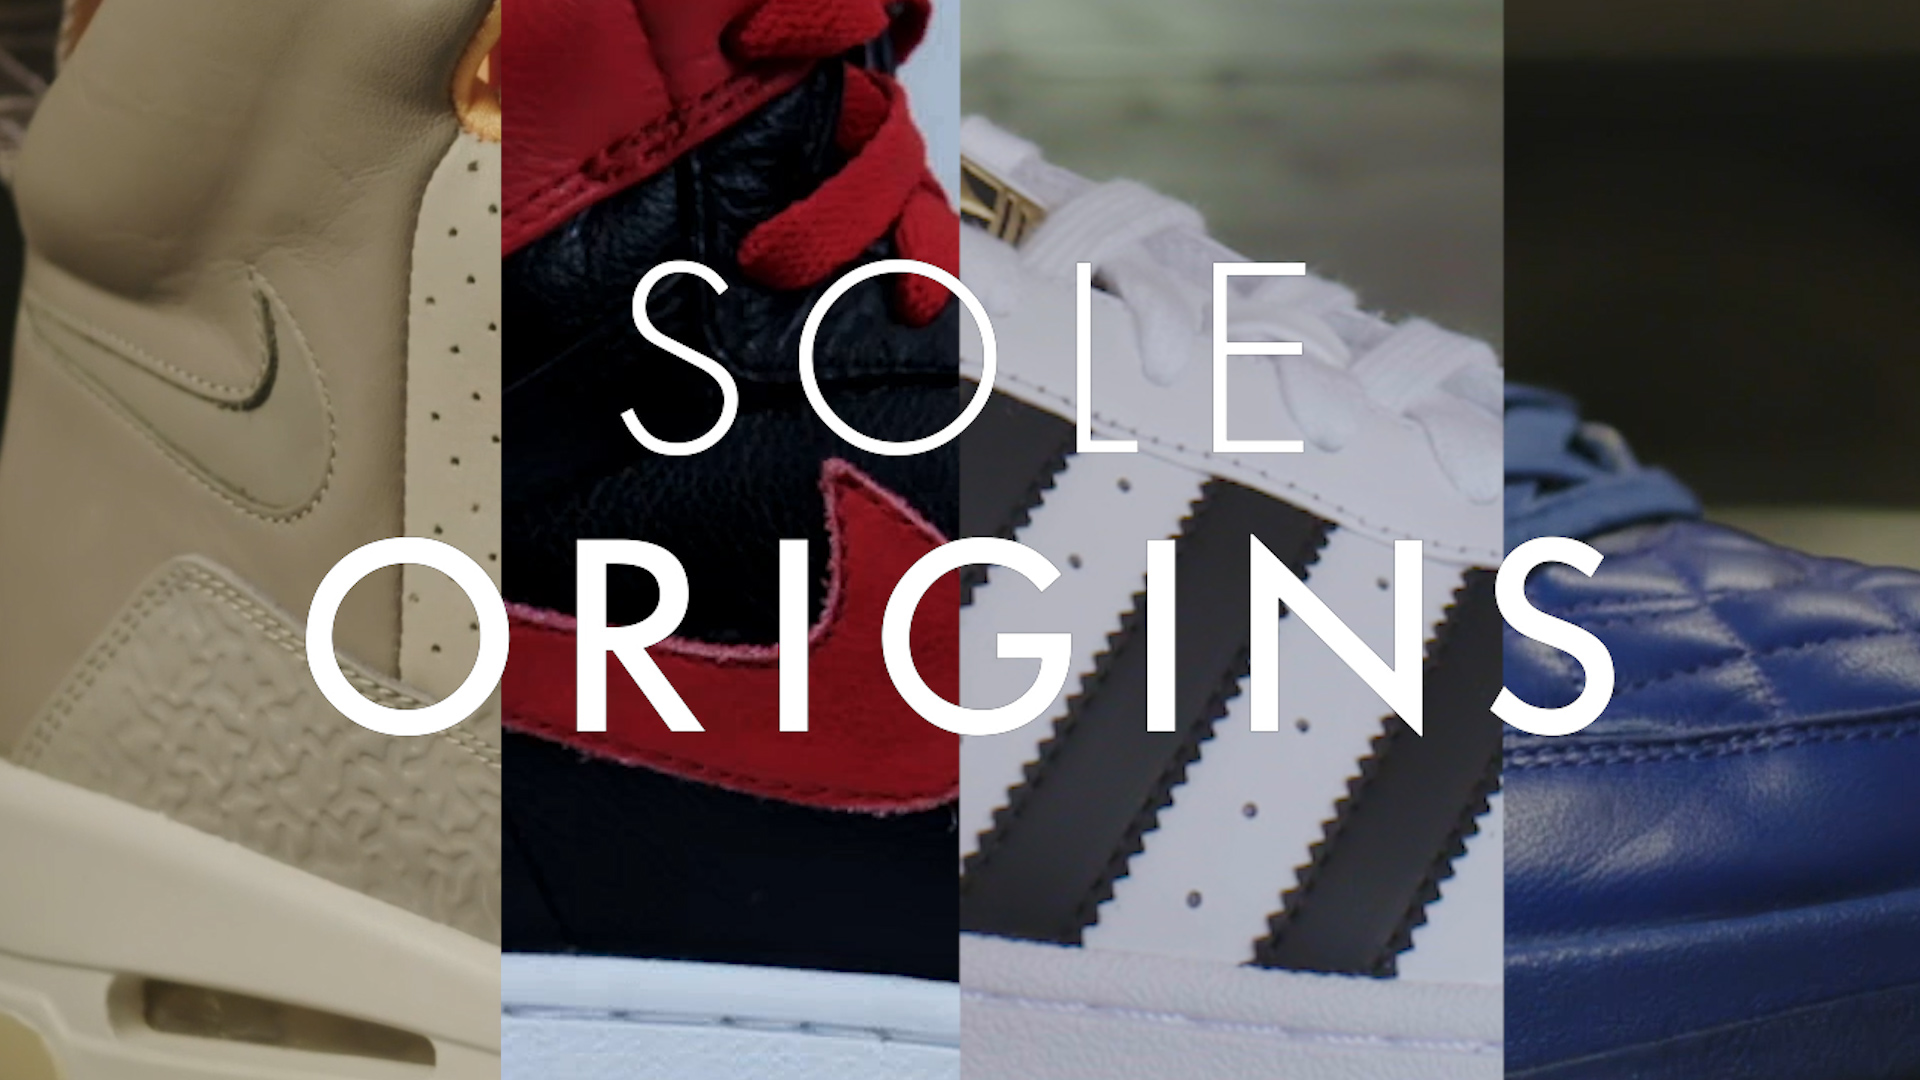 origins sneakers